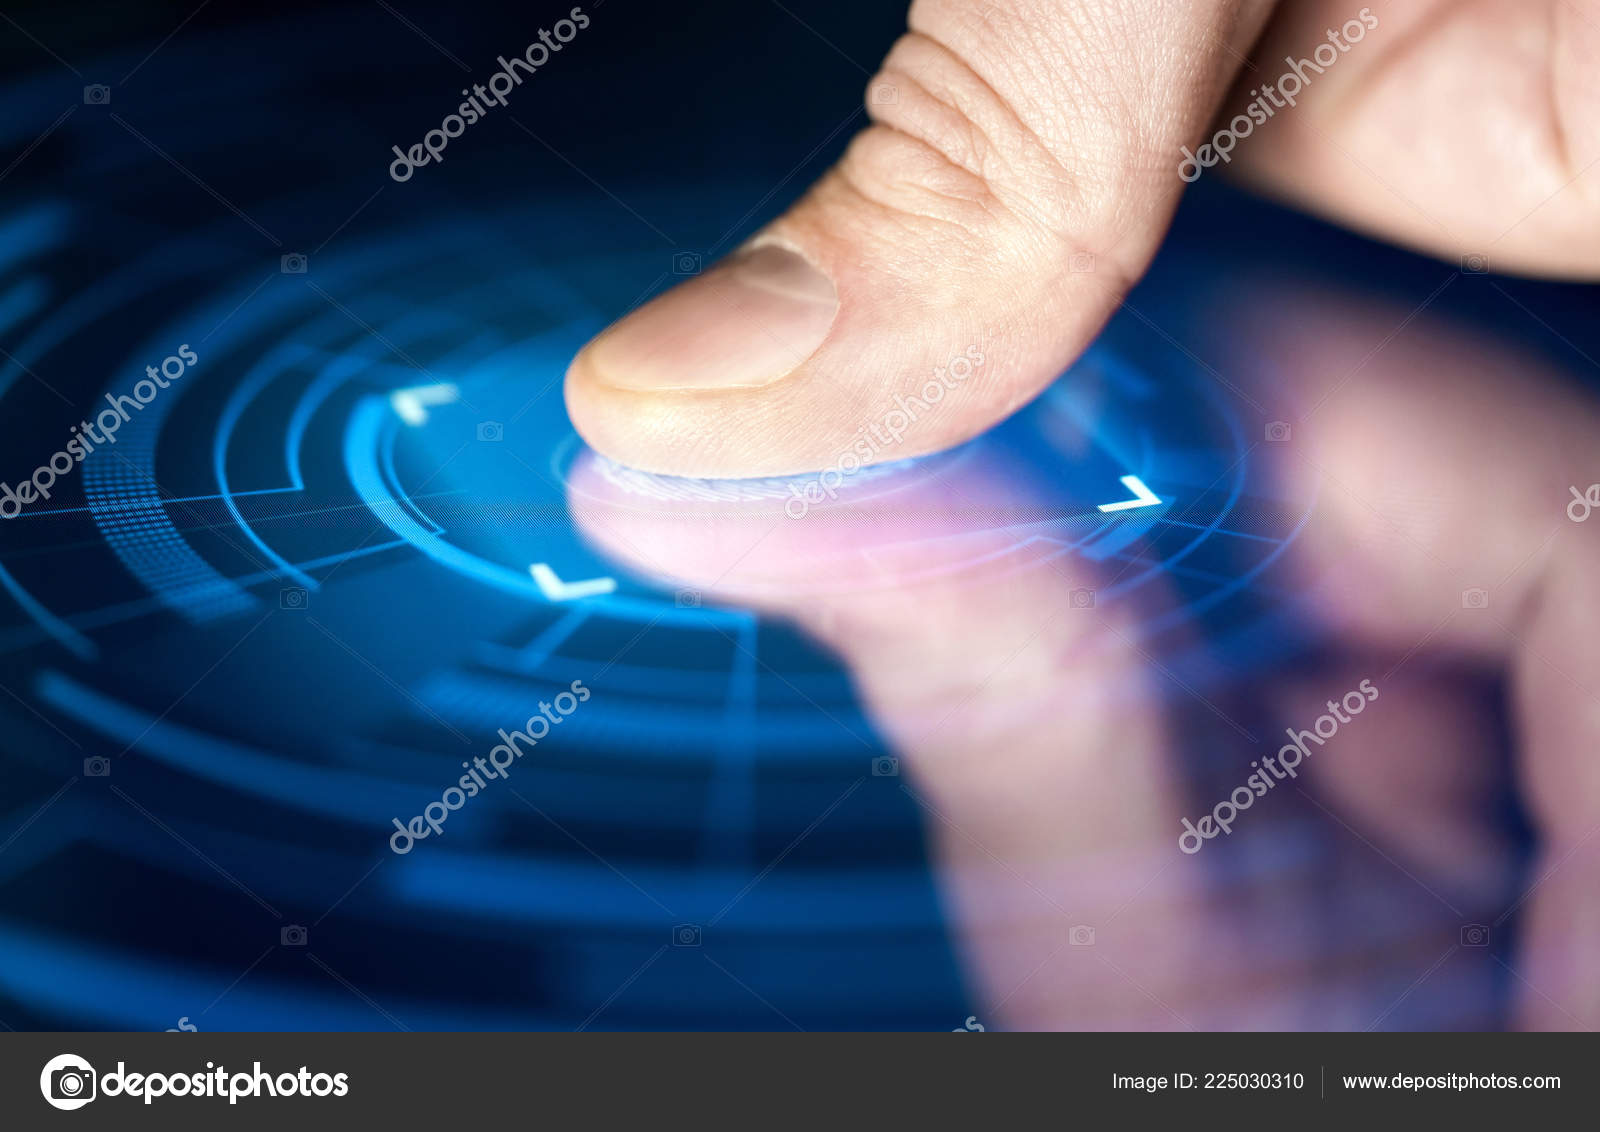 Fingerprint Recognition Technology Digital Biometric Cyber Security  Identification Finger Print Stock Photo by ©terovesalainen 225030310